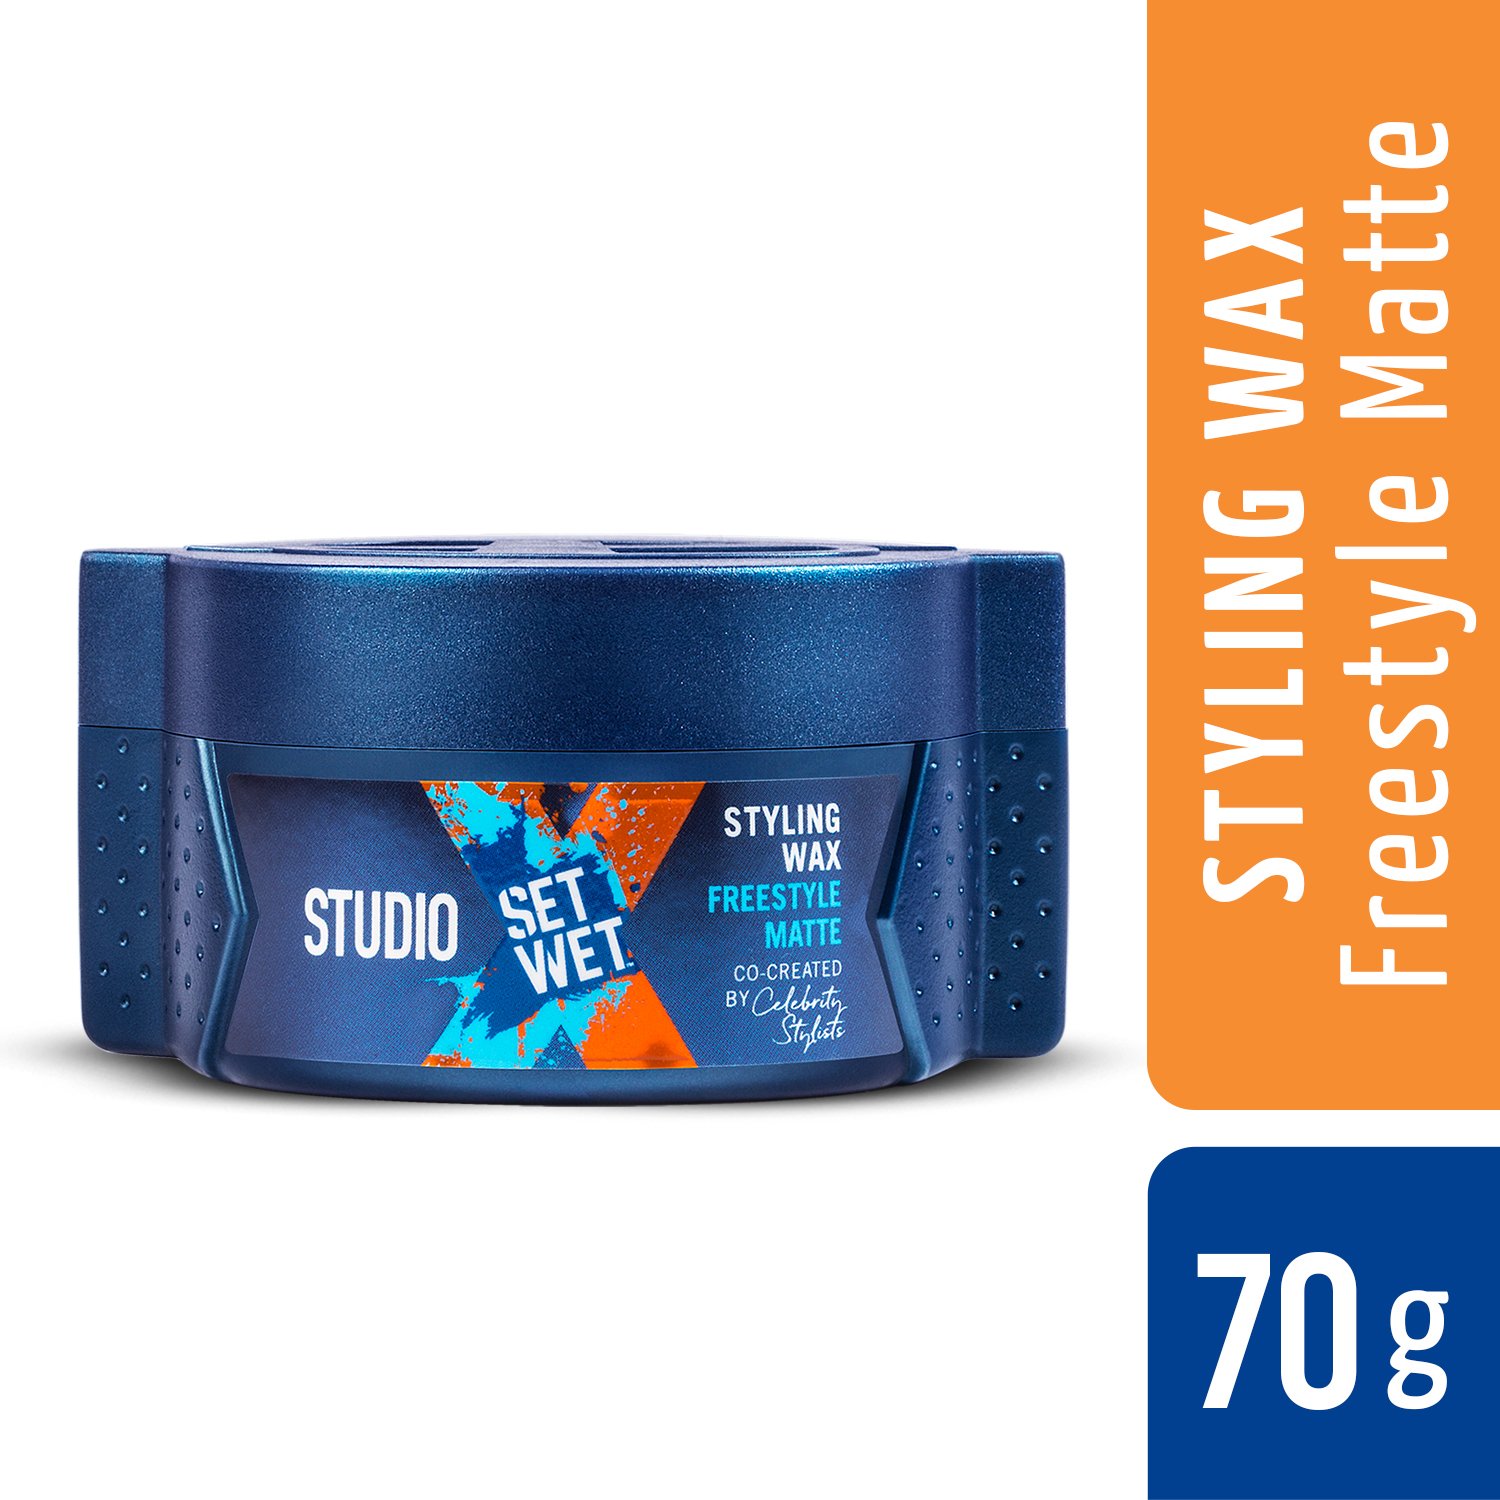 Set-Wet-Studio-X-Hair-Styling-Wax-For-Men-Freestyle-Matte-70 gm –  